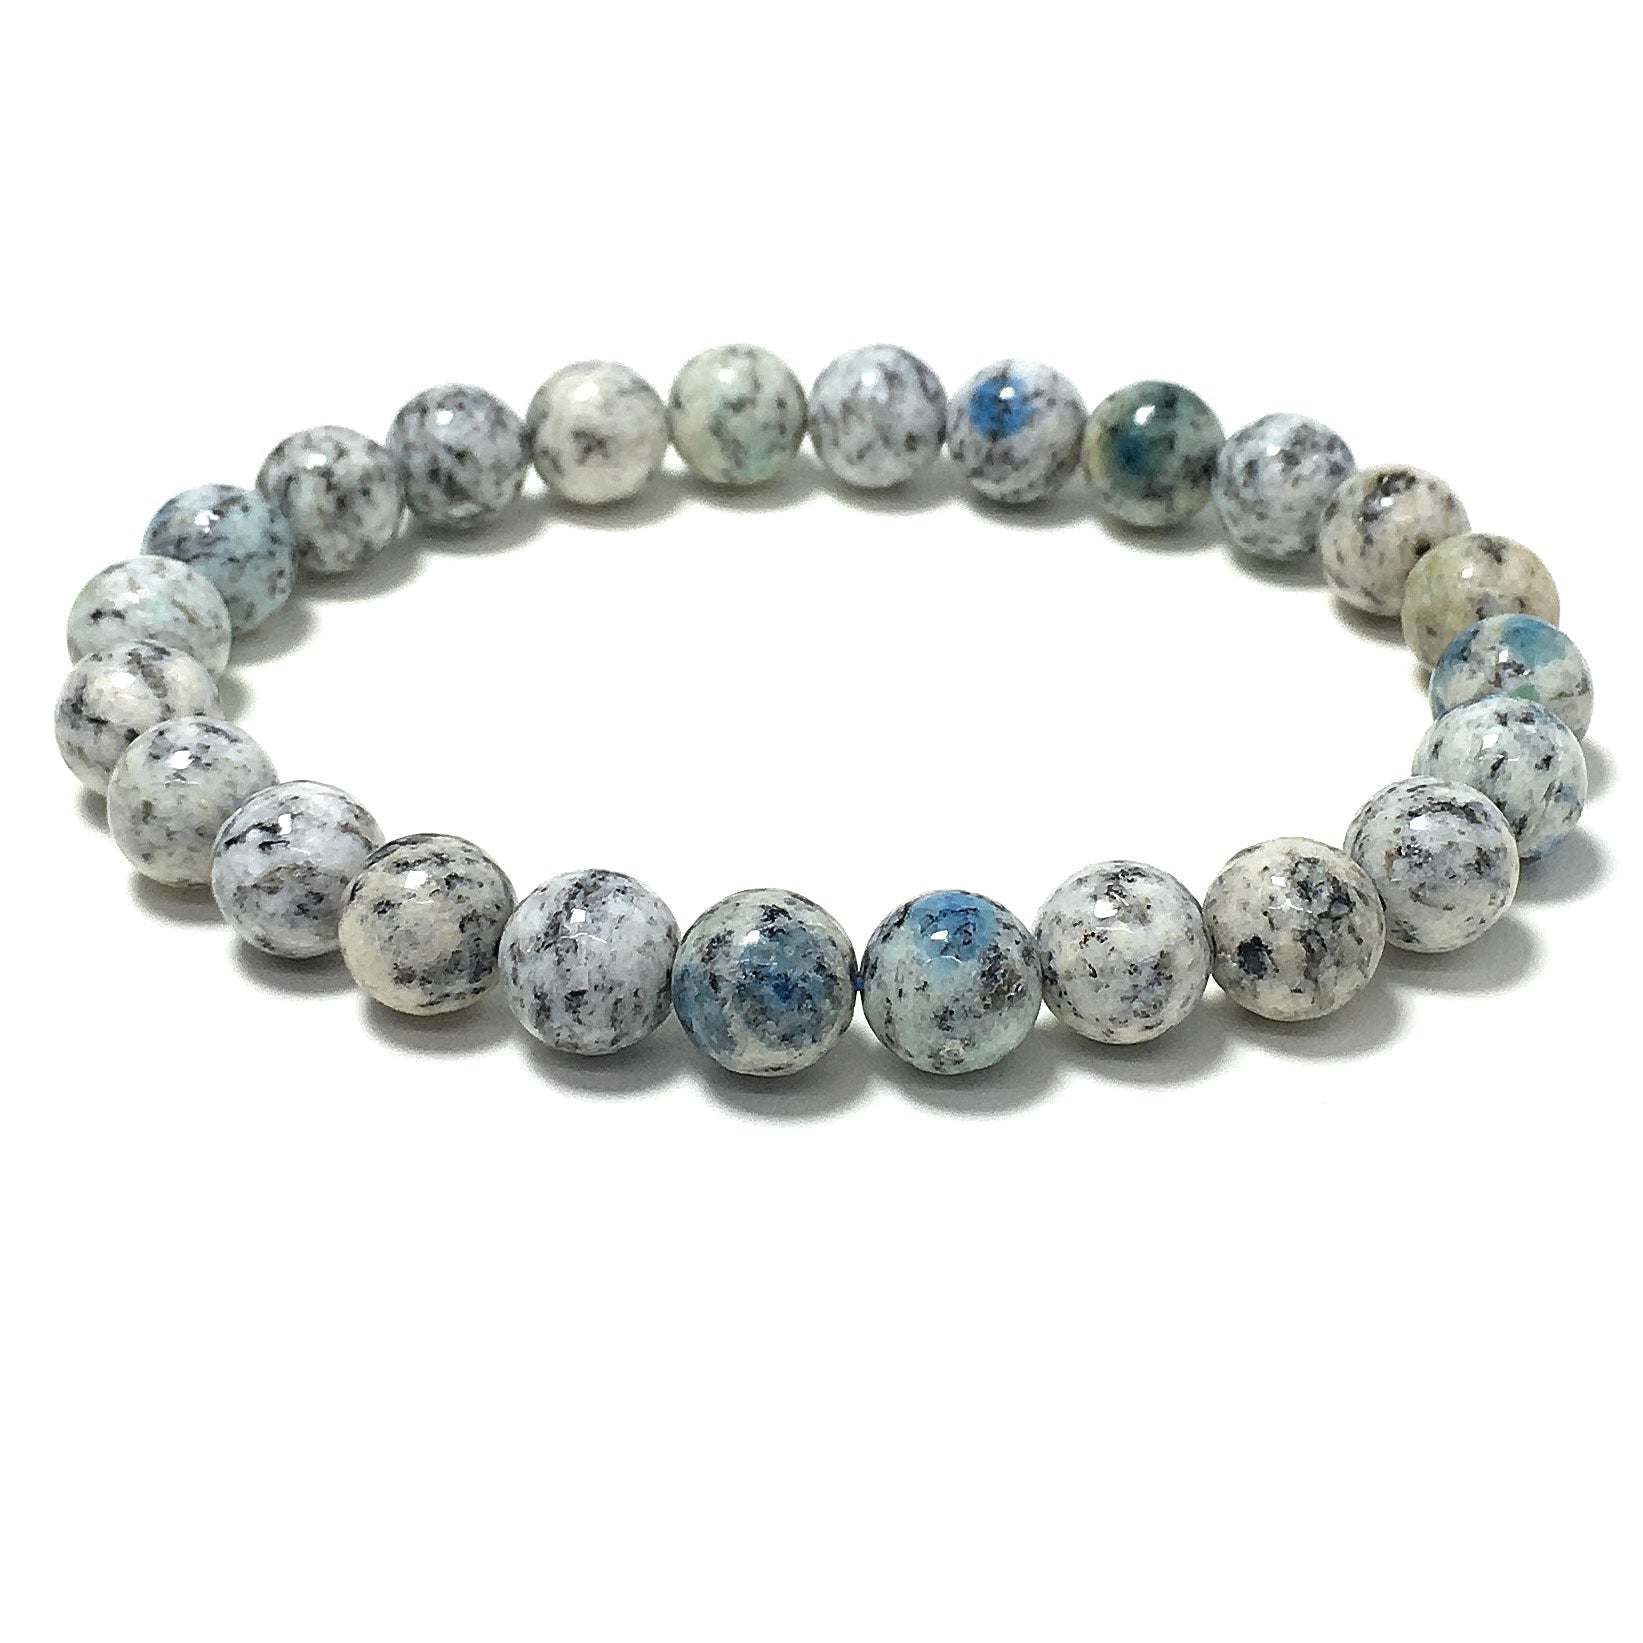 K2 Gemstone Crystal Healing Stretch Beads Bracelet